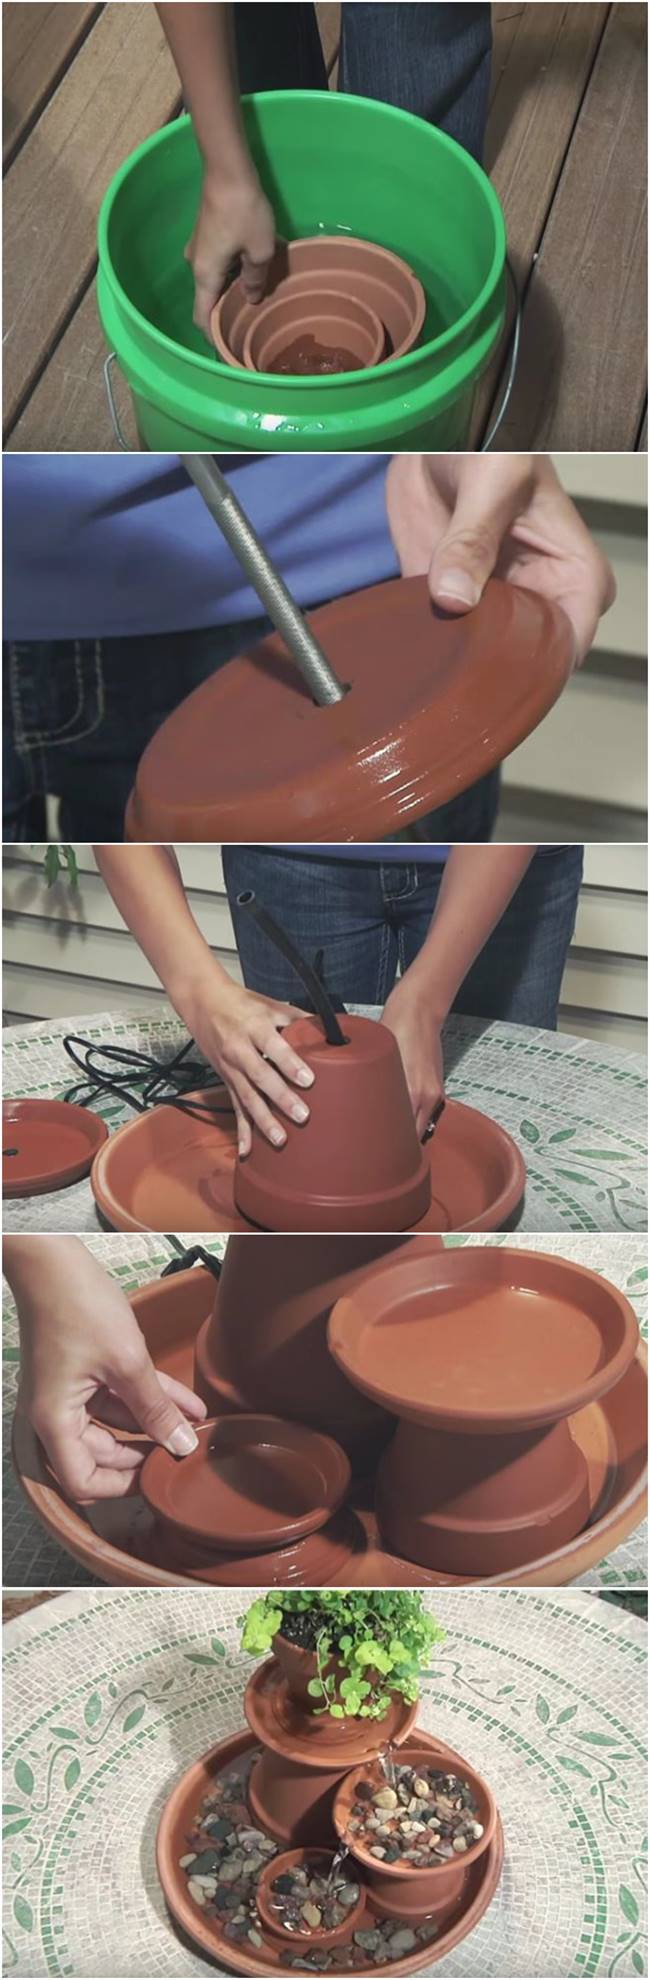 Creative Ideas - How To Build A Terracotta Fountain